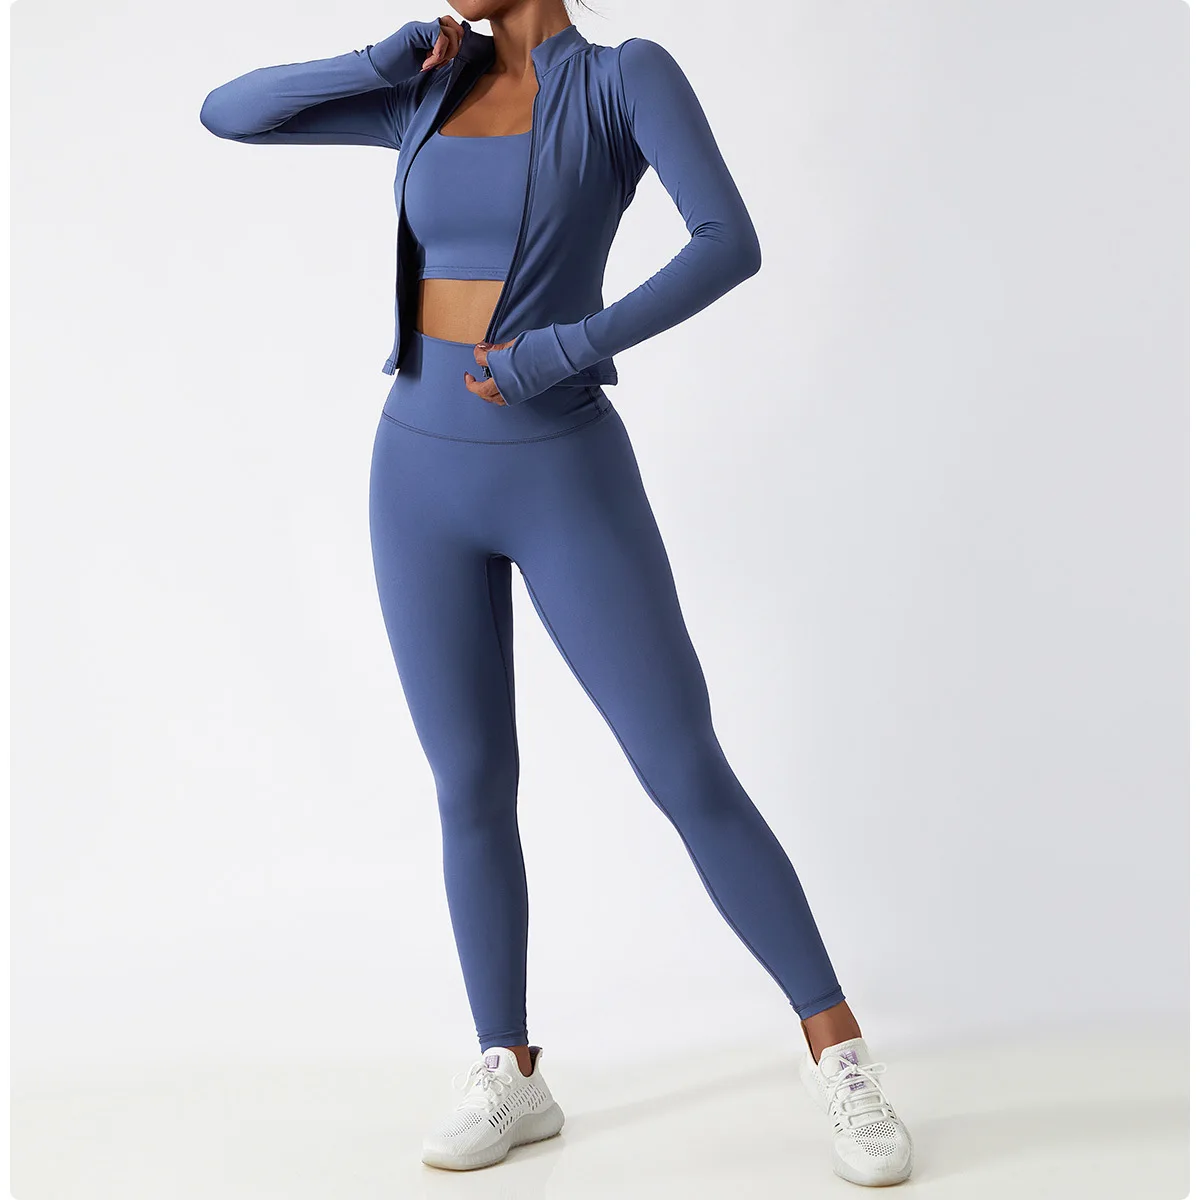 Oemzip Tracksuit Sexy High Waist Workout Set Active Wear Sports Bra ...